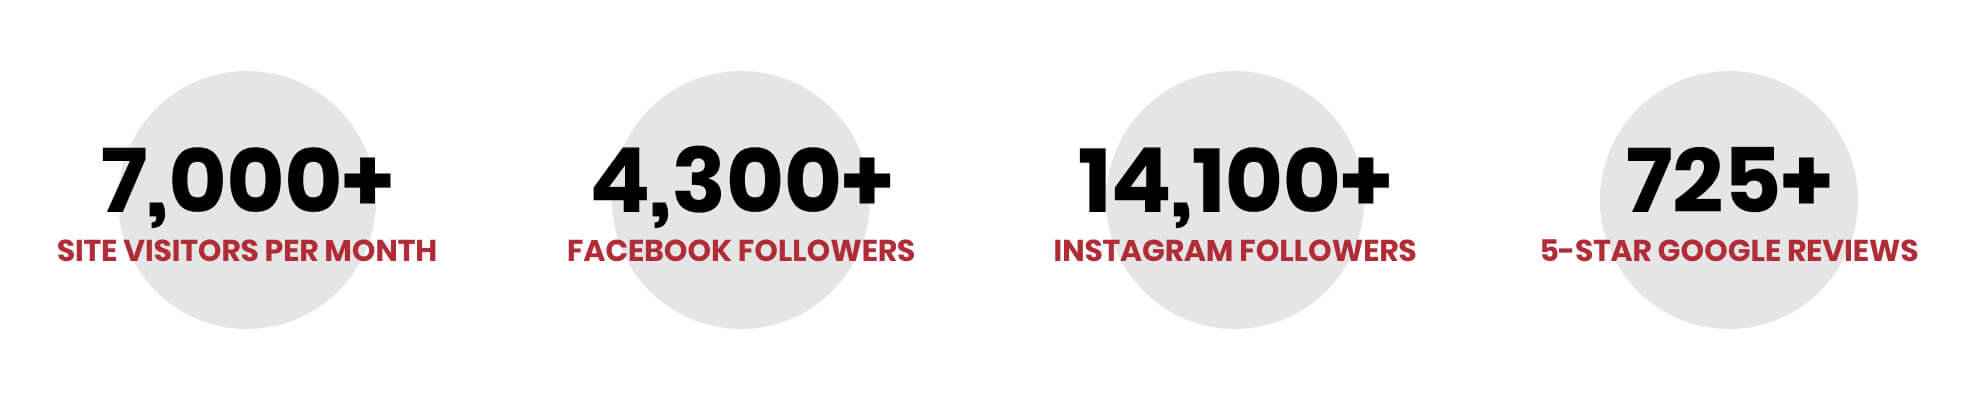 7,000+ Site Visitors Per Month, 4,300+ Facebook Followers, 14,100+ Instagram Followers, 725+ 5-Star Google Reviews